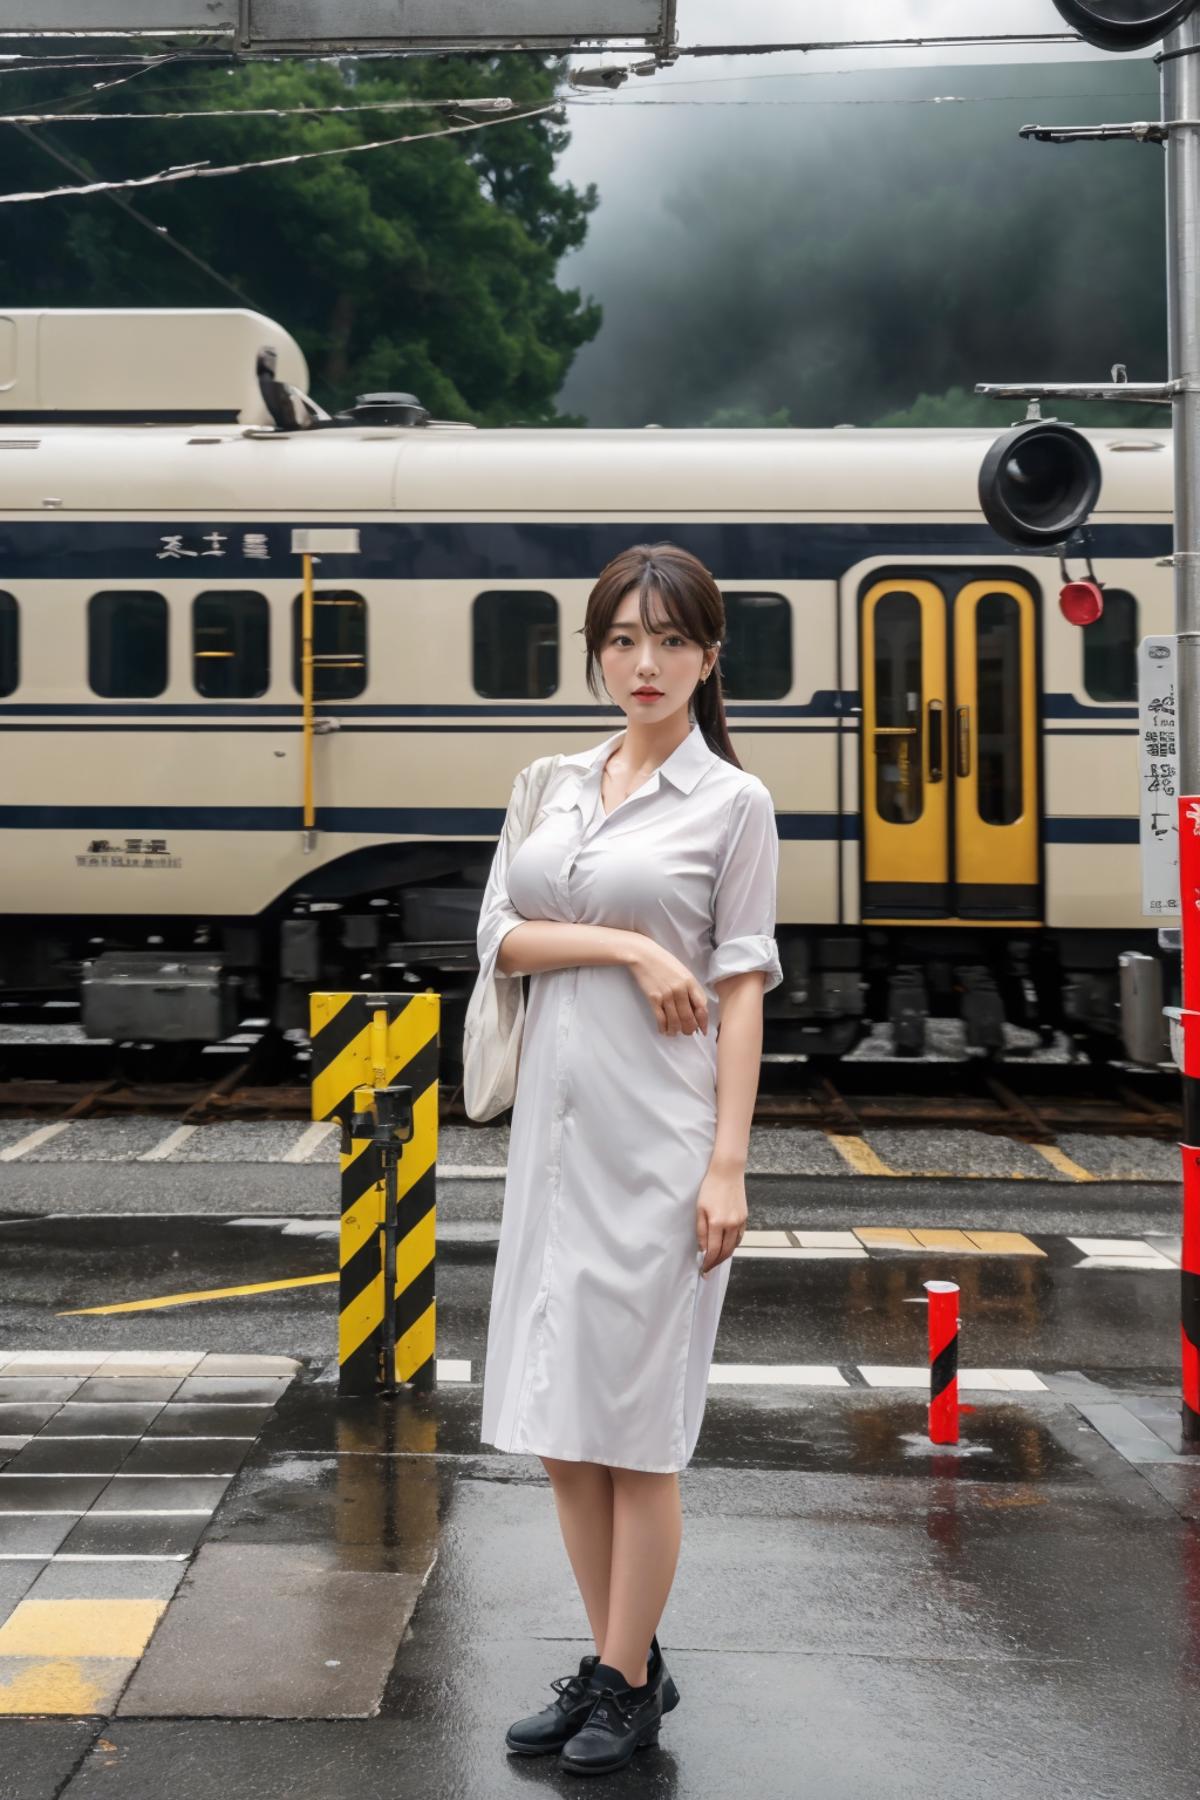 Japanese railroad crossing/踏切 image by joyy114